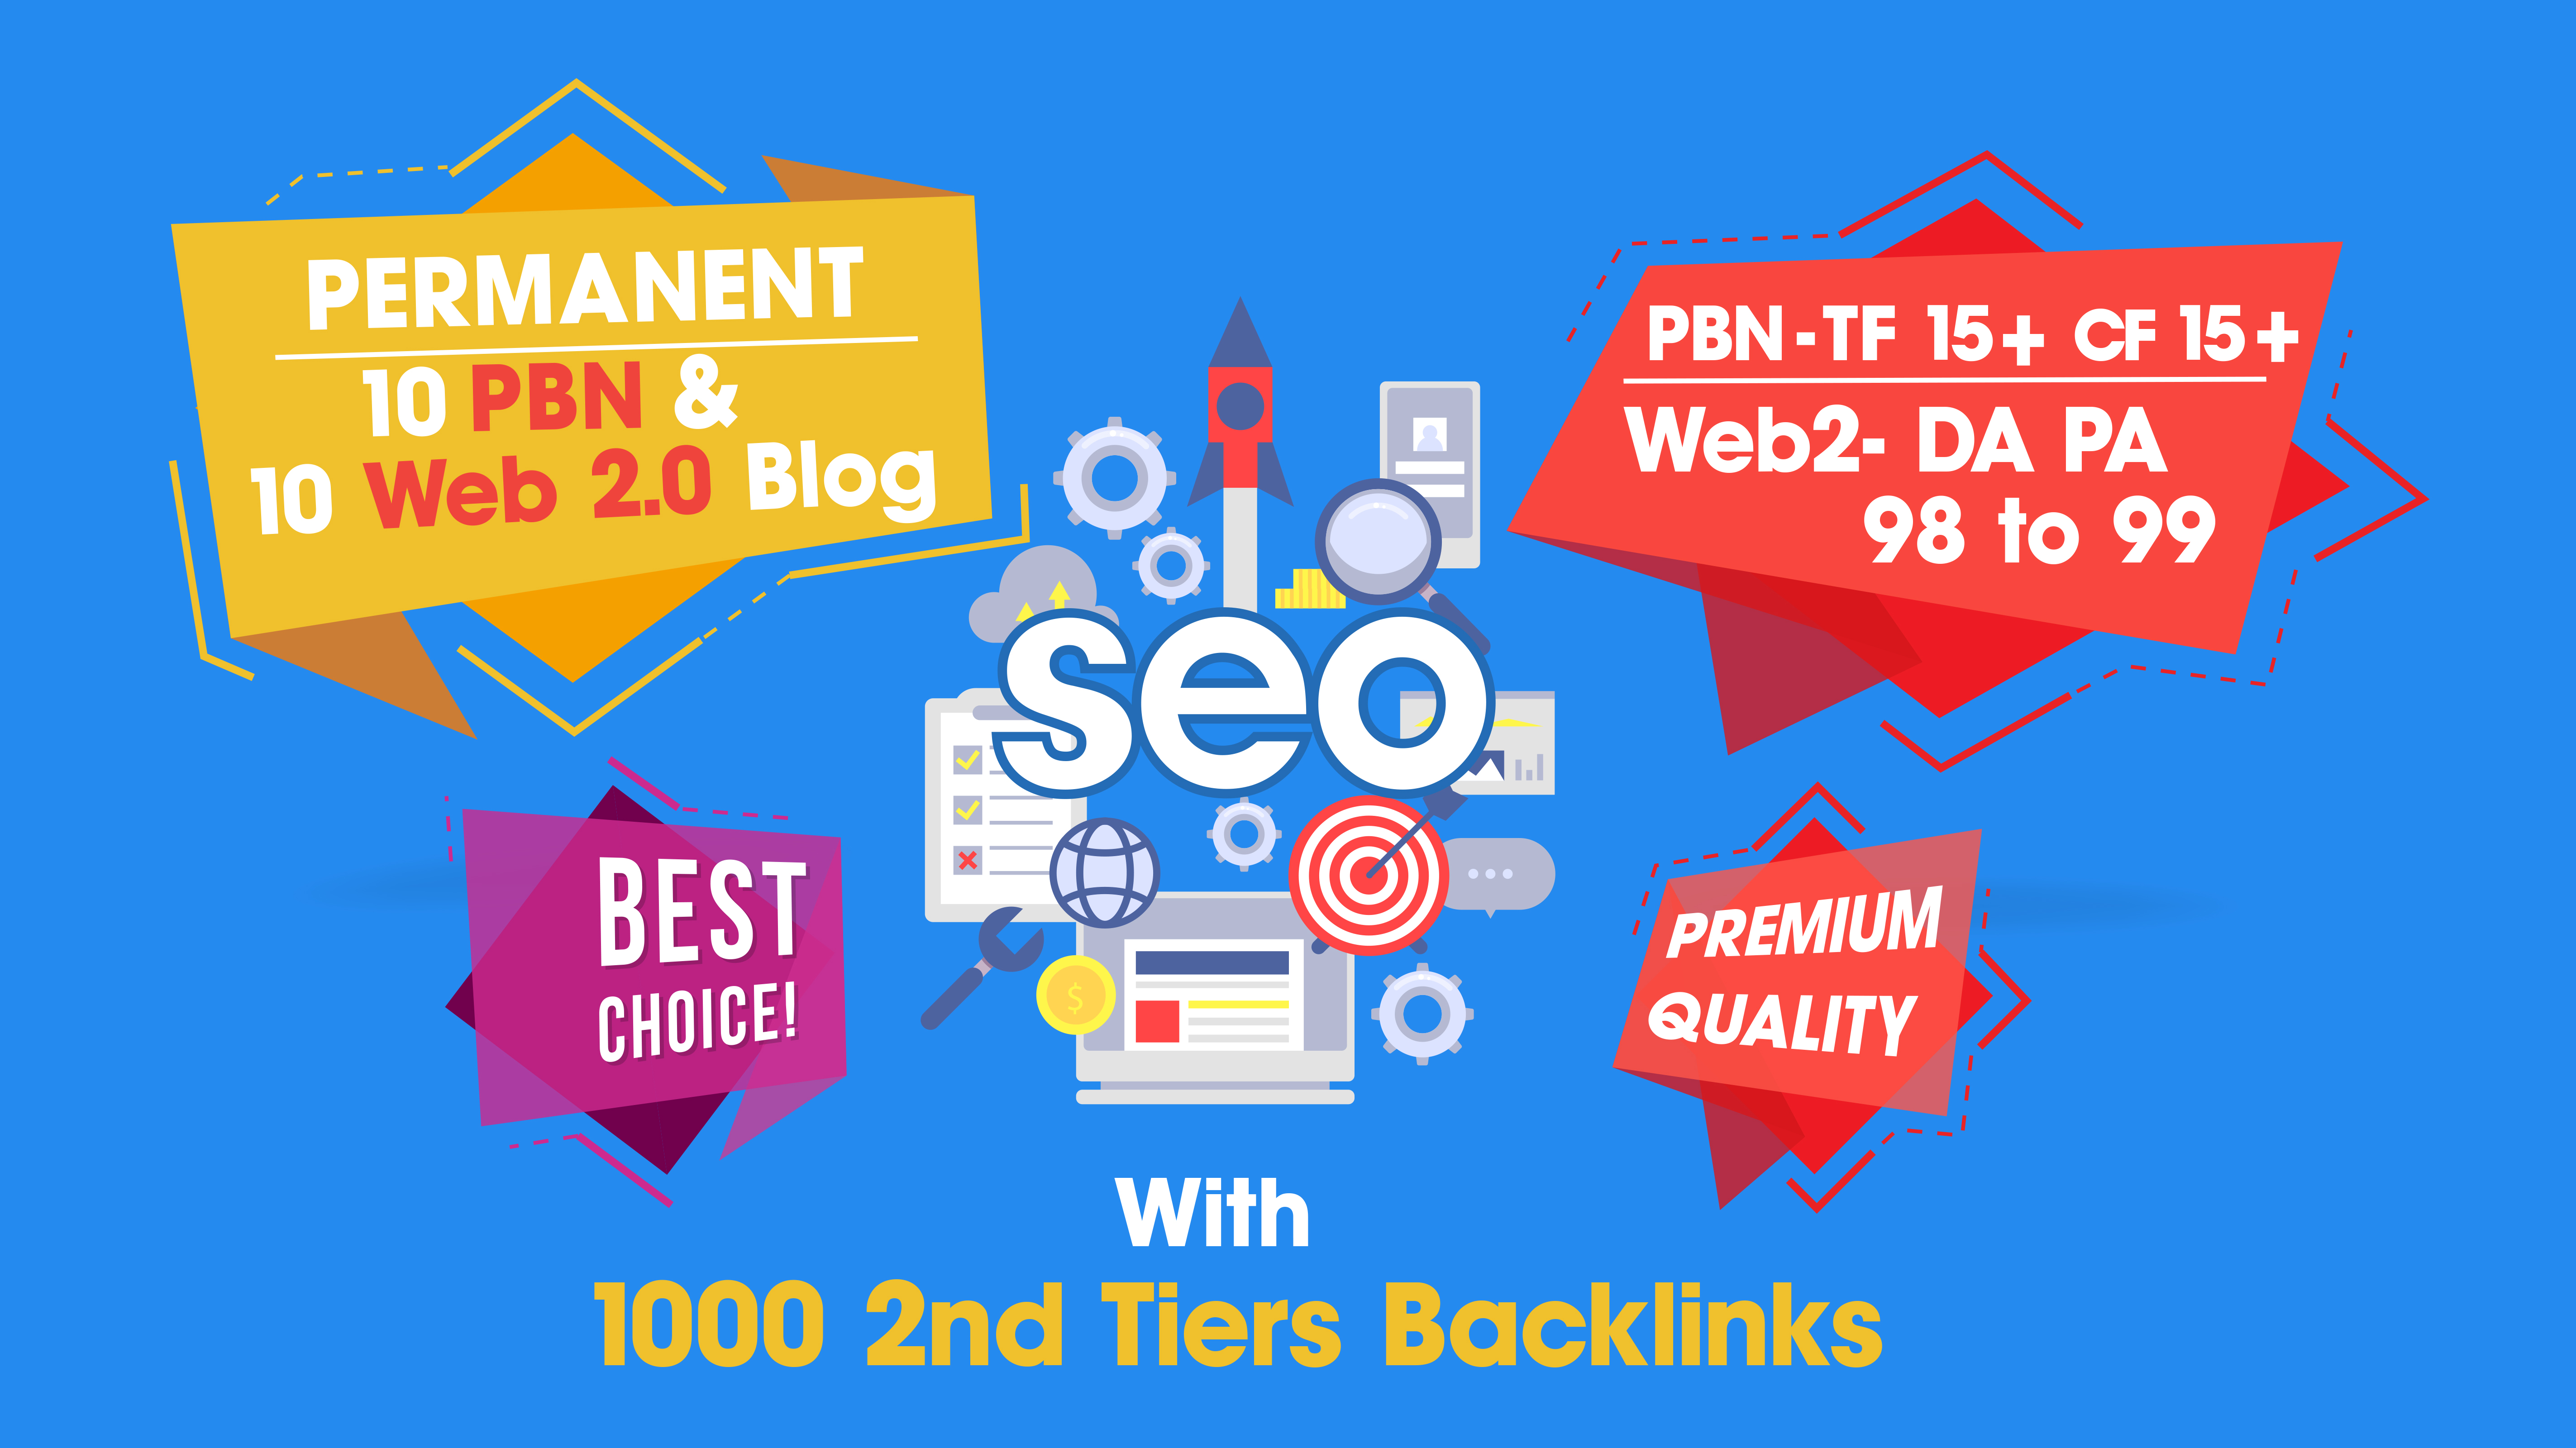 Skyrocket Google Ranking- 10 PBN & 10 Web 2.0 Blogs With 1000 2nd Tier Backlinks